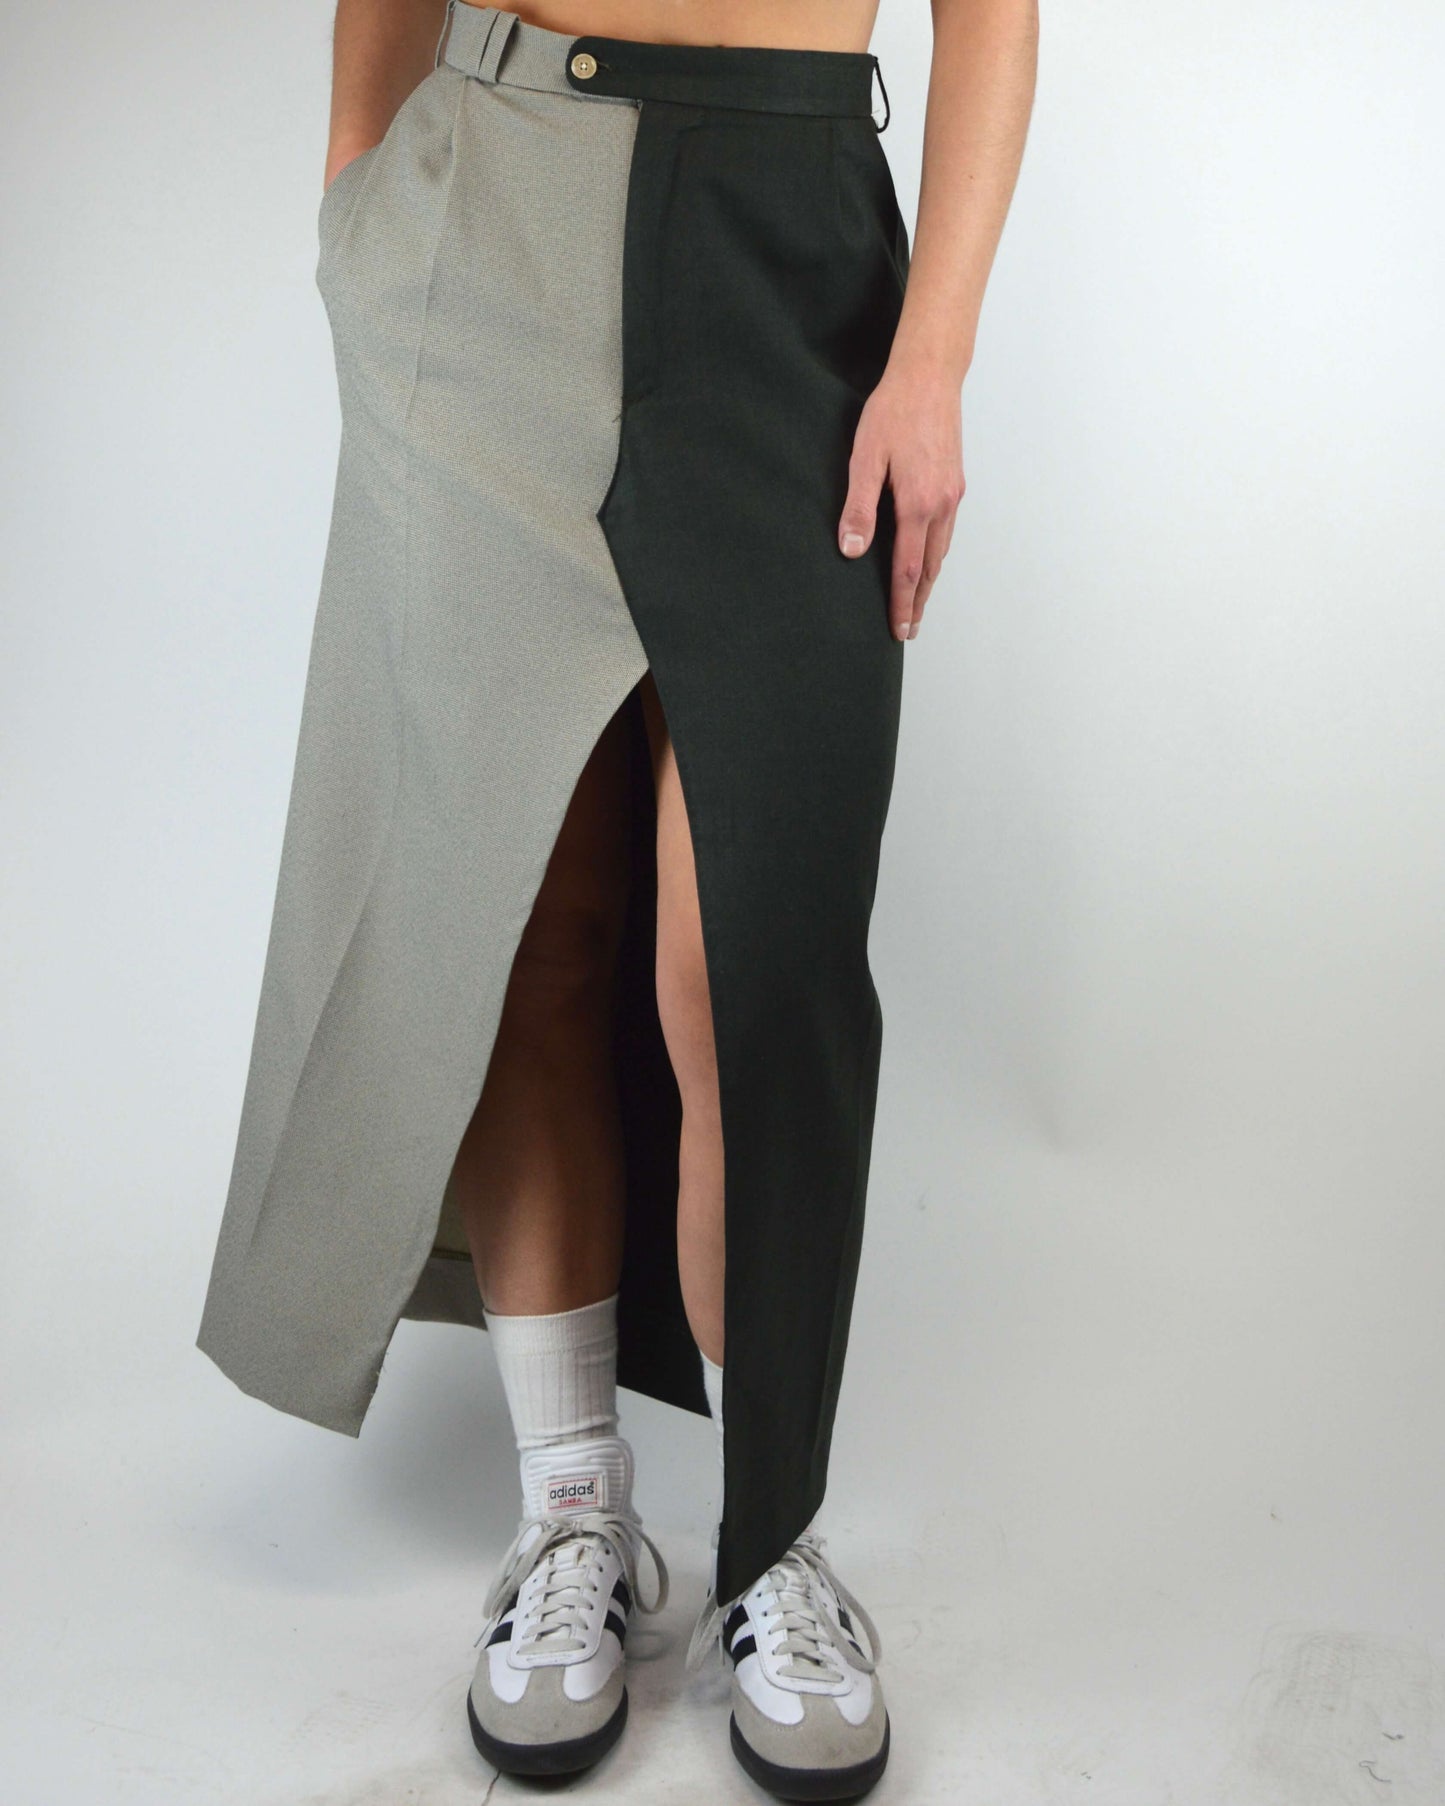 DUO Long Skirt - Darker Green On Top (S/M)